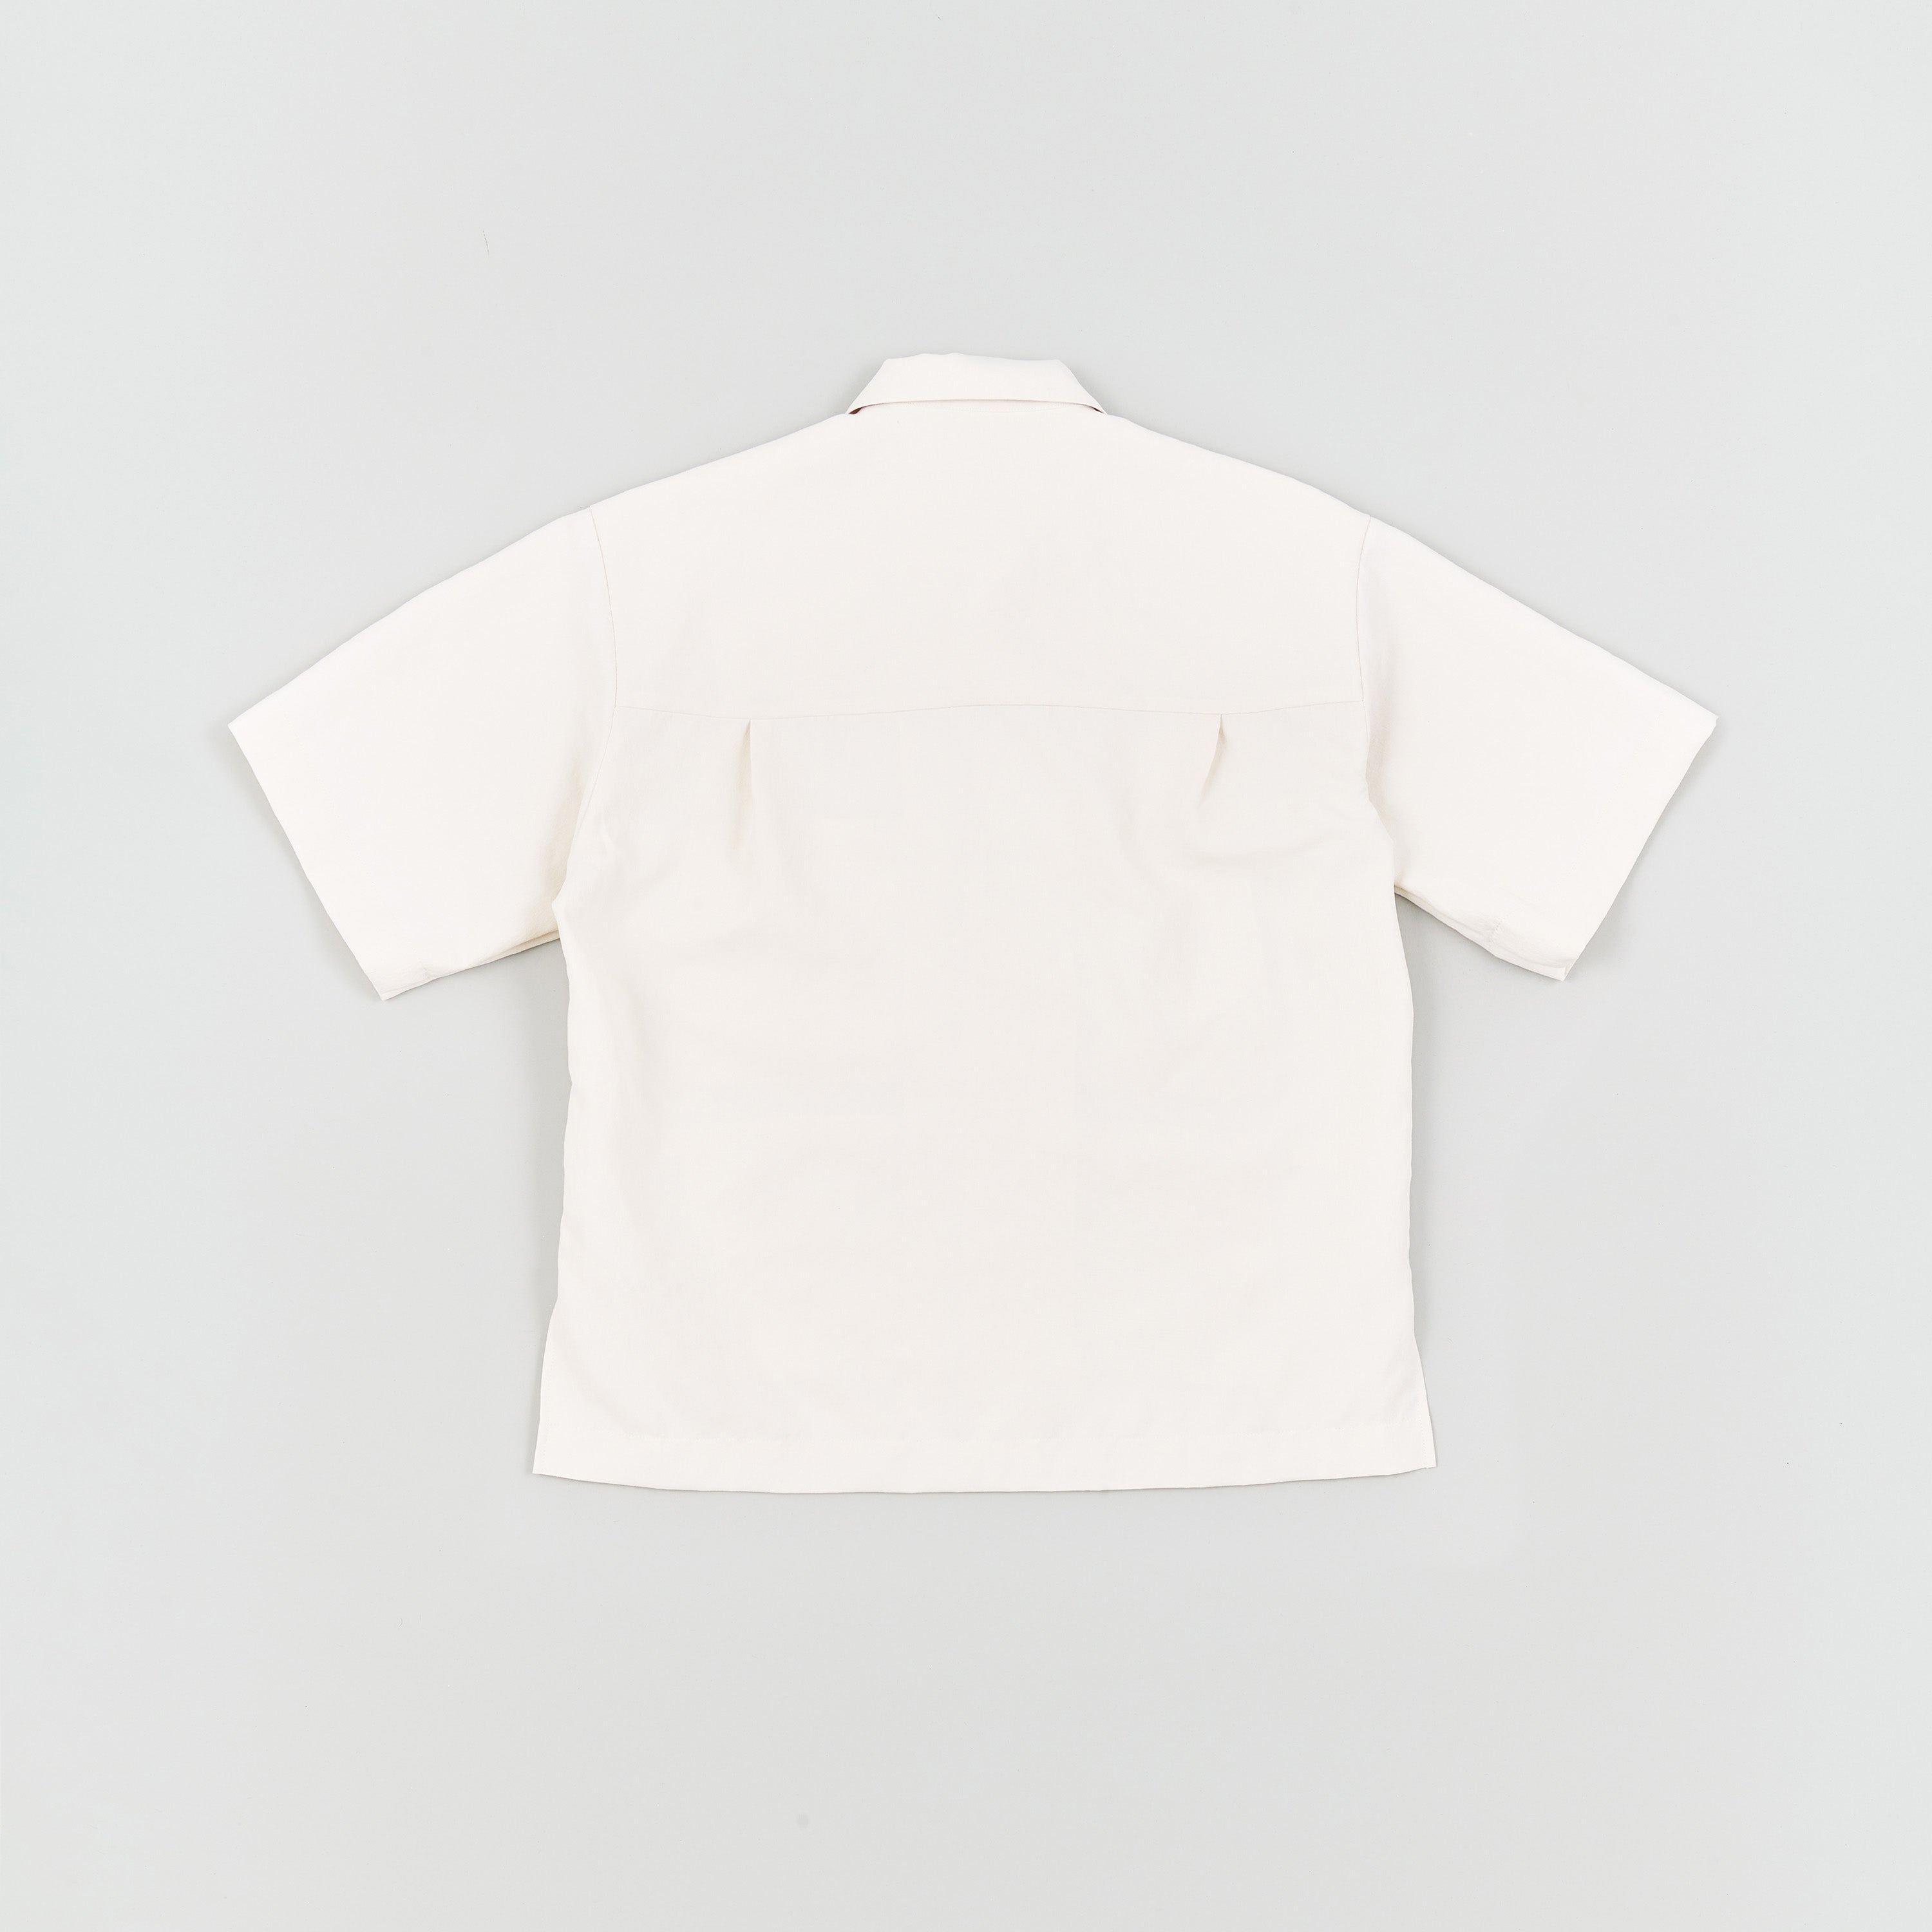 4 Seam Pockets Open Collar S/S Shirt[White]